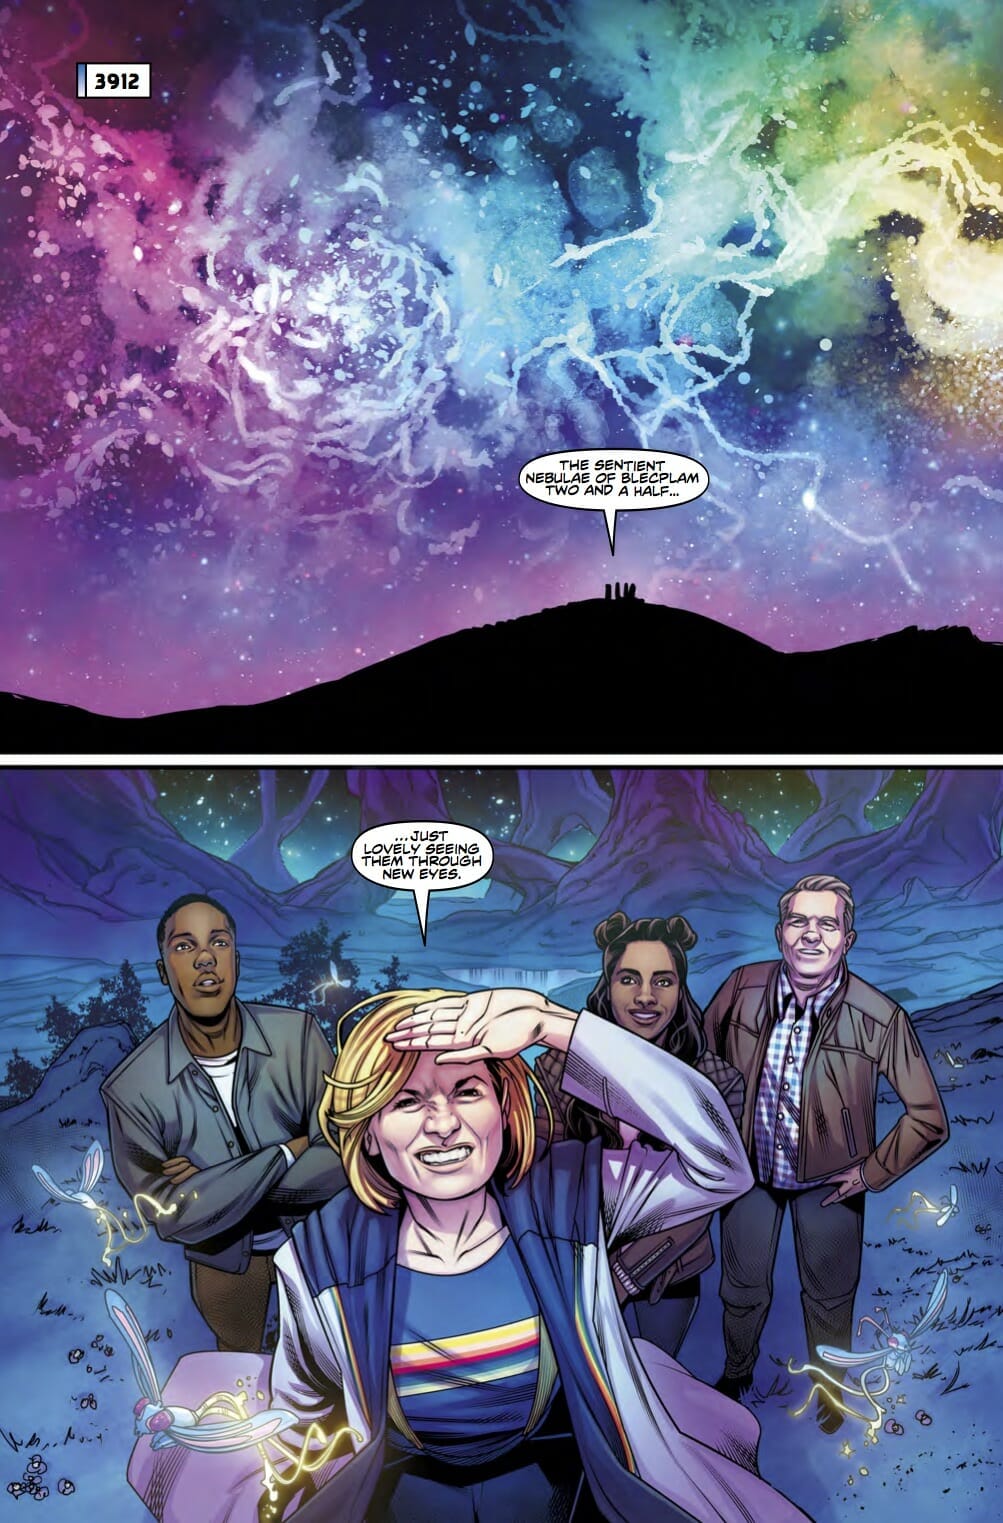 Thirteenth Doctor volume 1 - cosmos